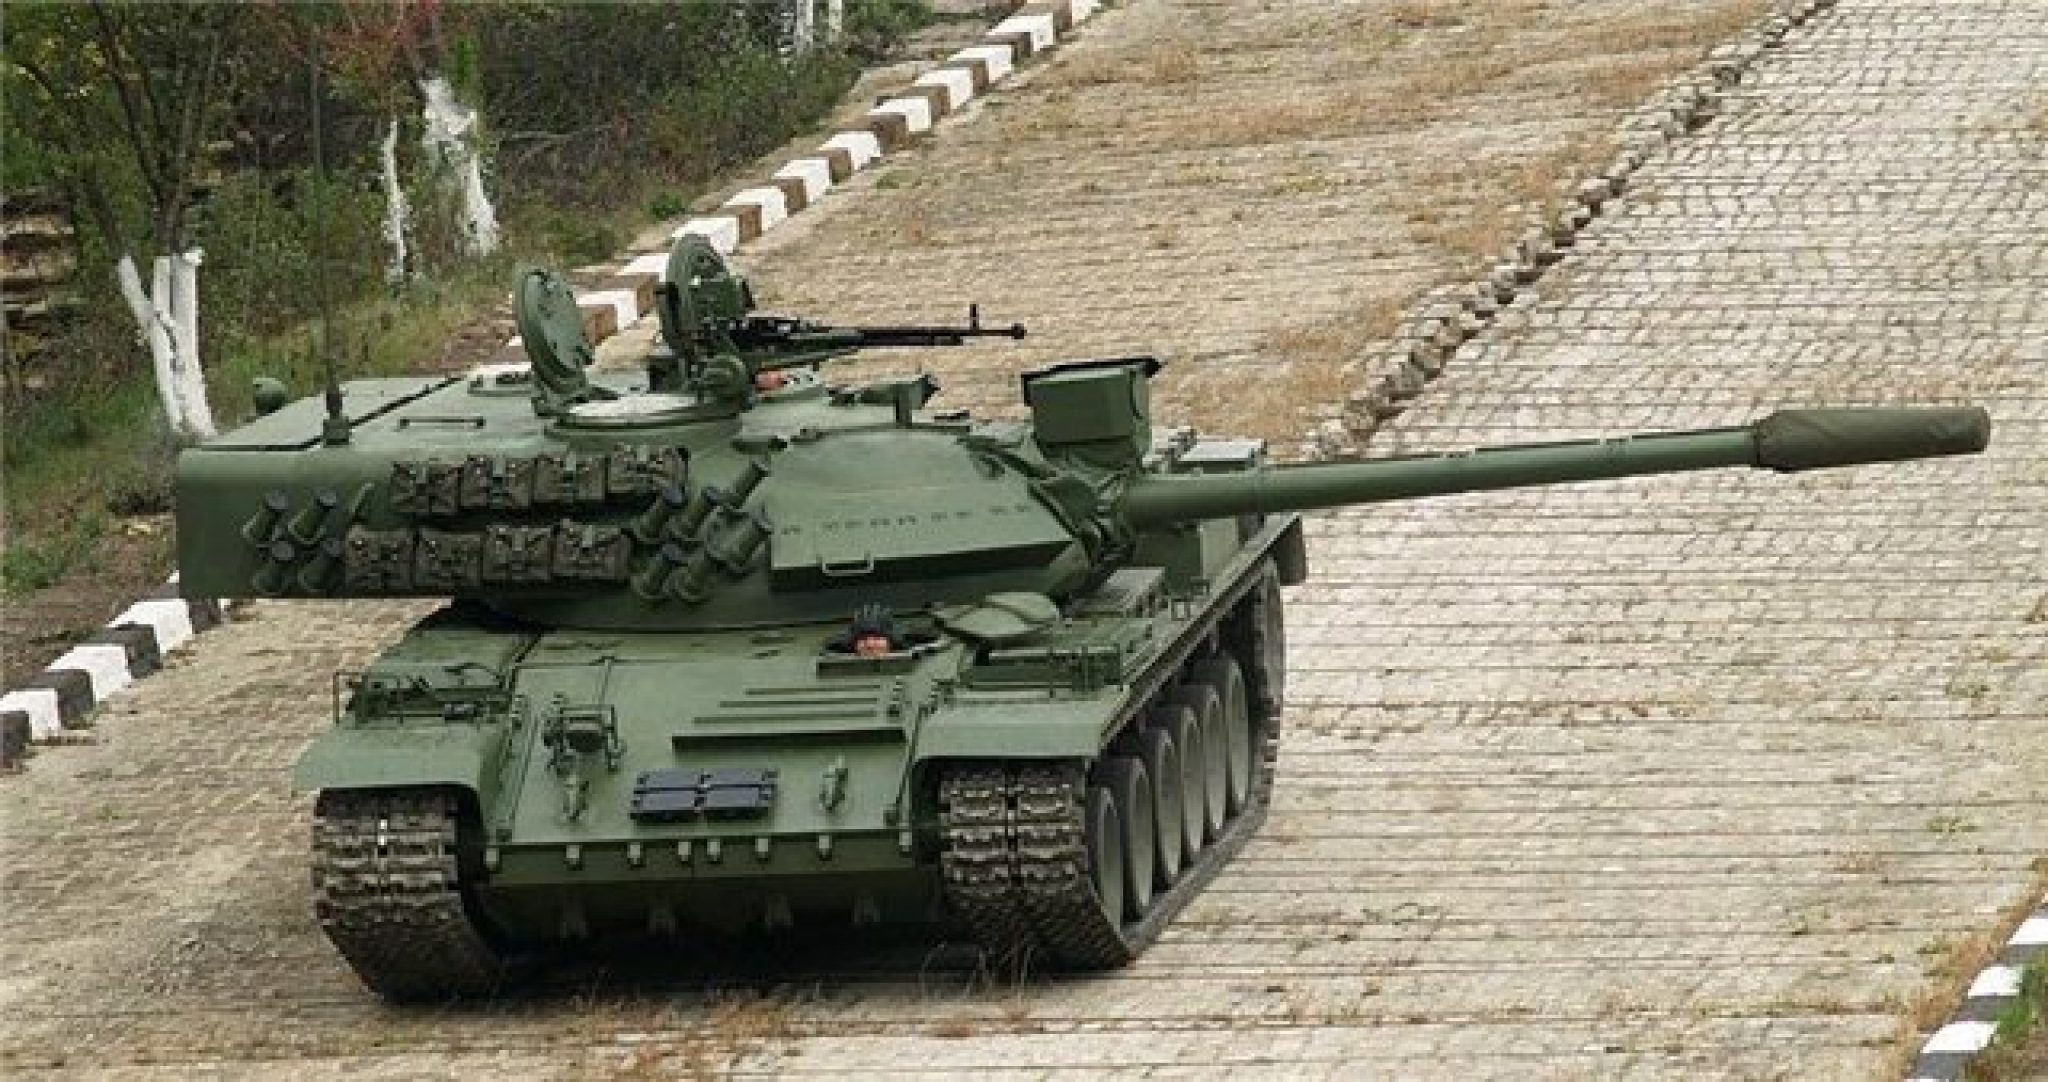 М 55с танк. Tr-85m1 «Бизон». Тр-85 танк Румыния. Танк tr-85m1 Bizonul. Румынский танк tr-85m1 Бизон.